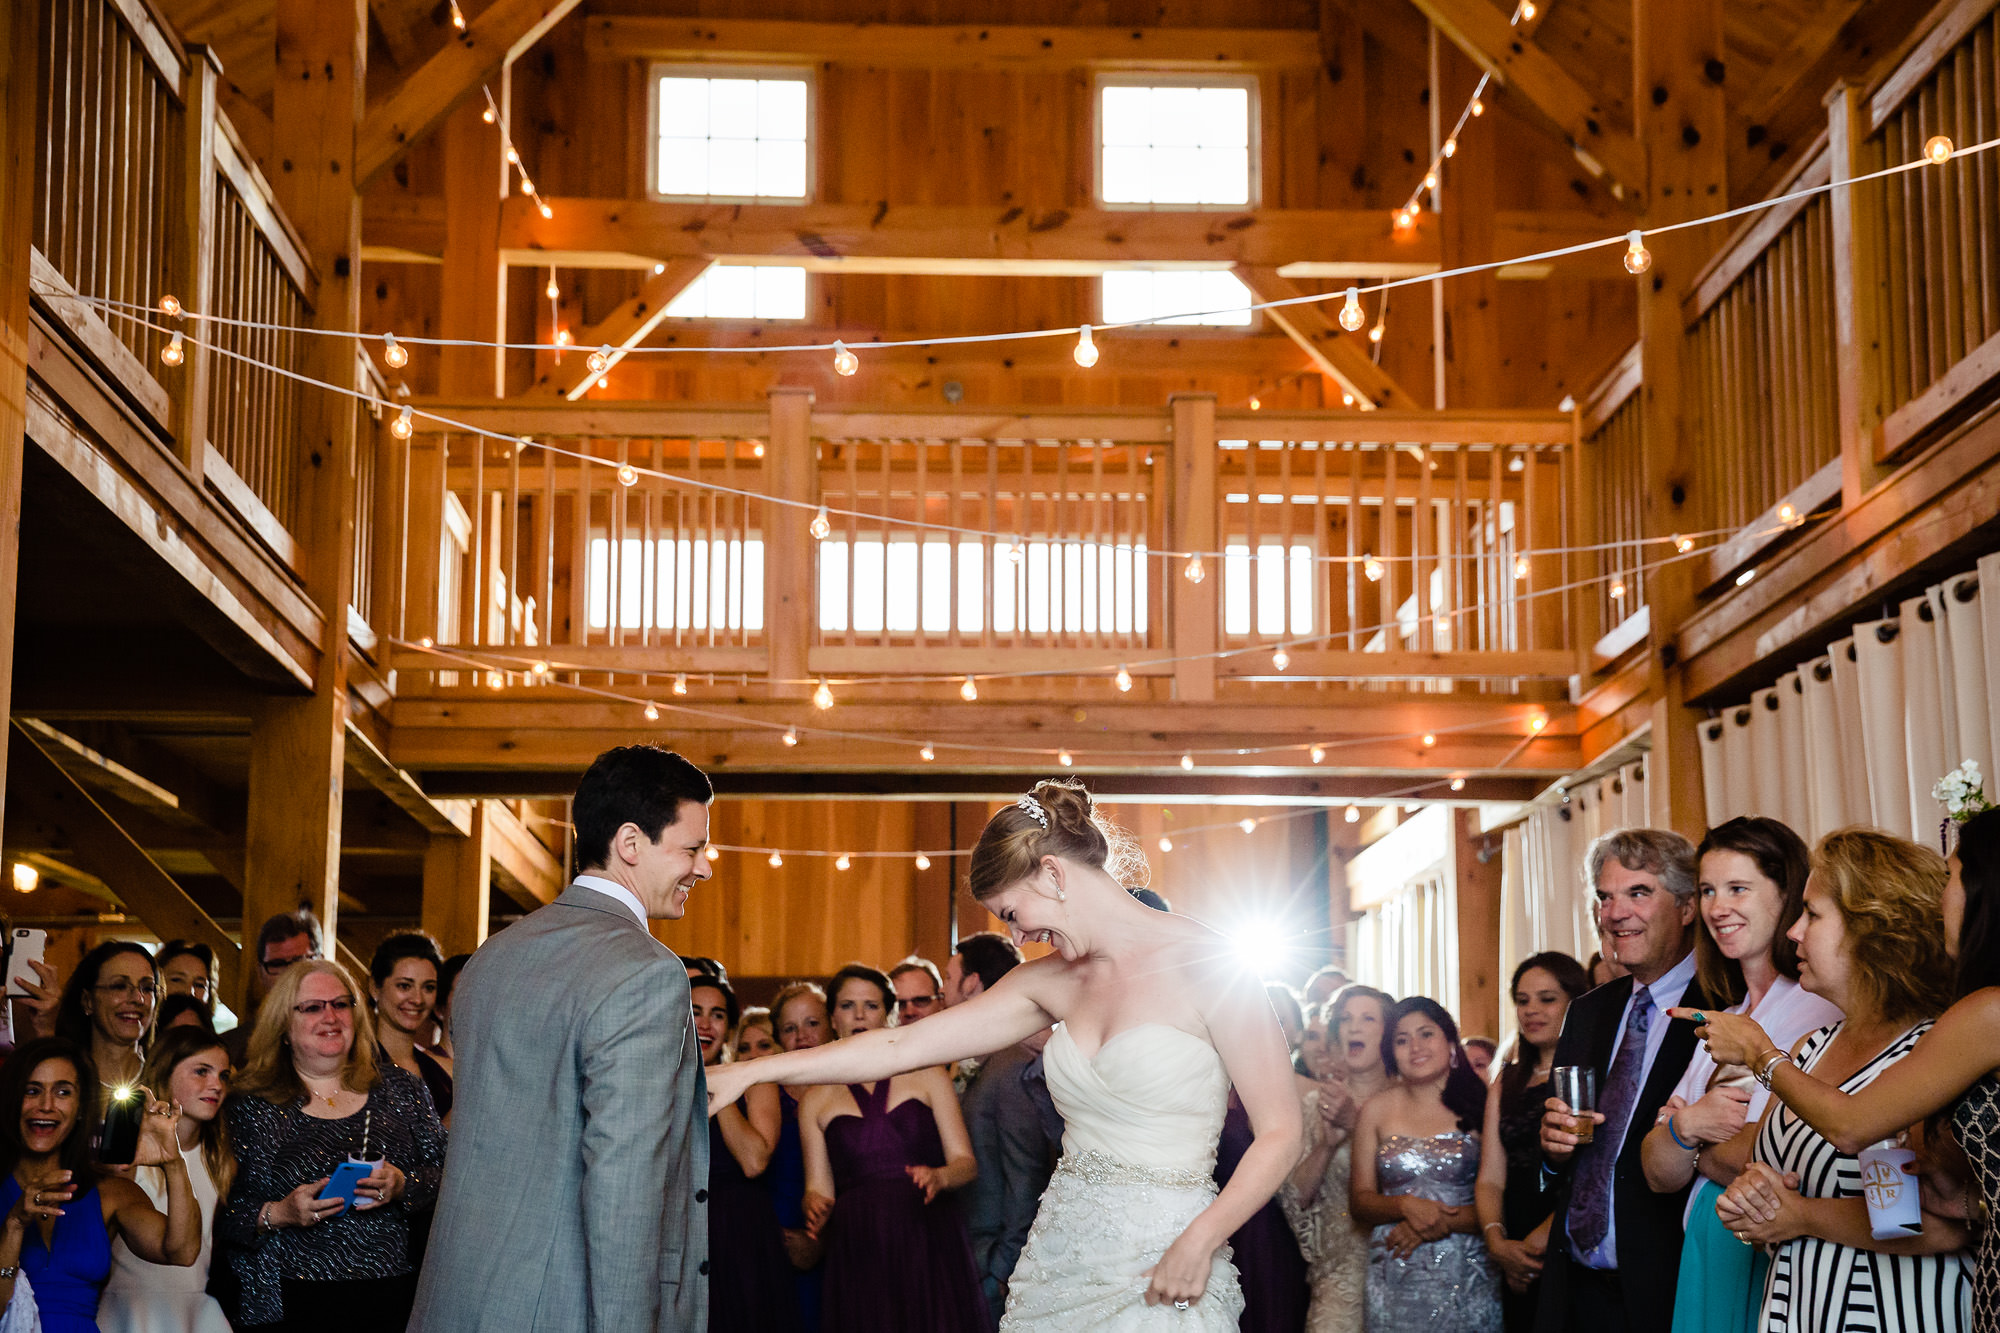 A wedding at Turner Farm on North Haven Island, Maine